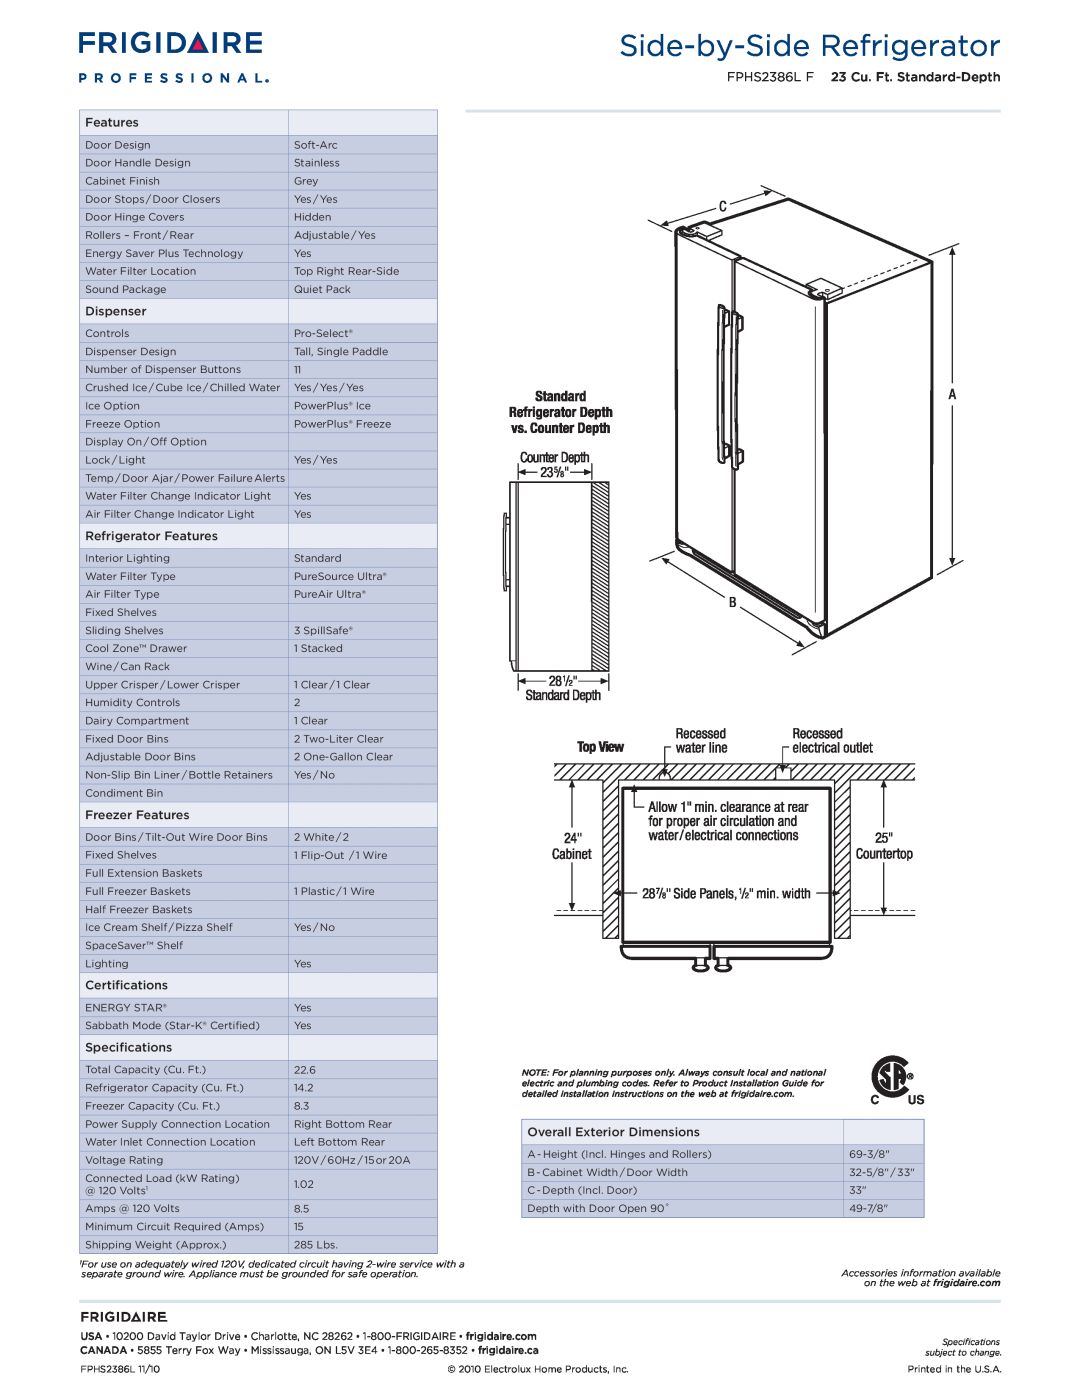 Frigidaire dimensions Side-by-SideRefrigerator, FPHS2386L F 23 Cu. Ft. Standard-Depth 